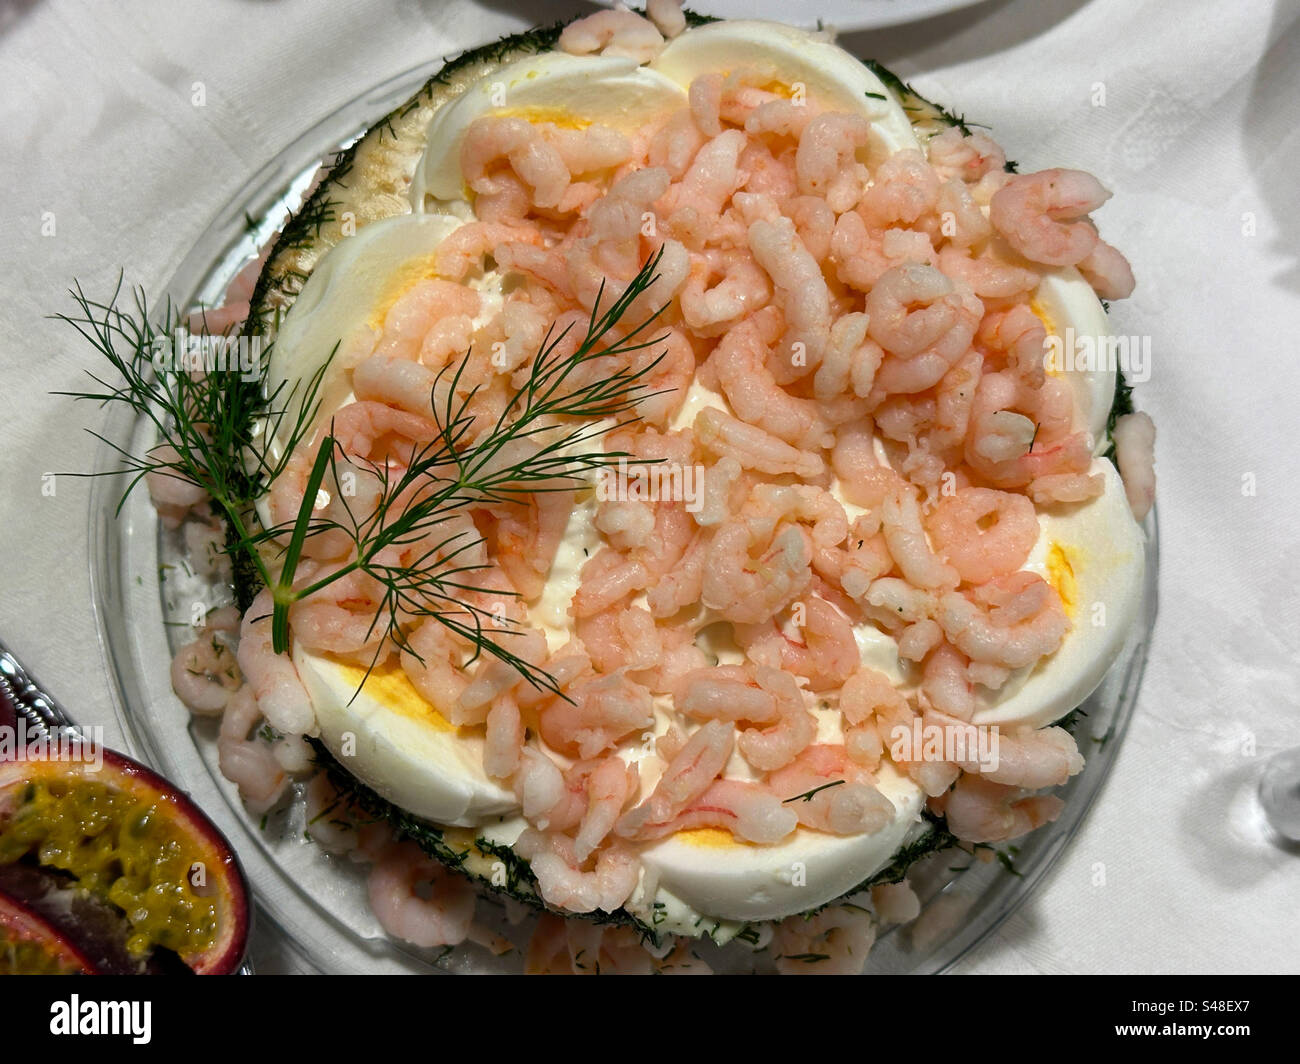 Tradizionale Smörgåstårta svedese (torta svedese) con gamberi e uovo sodo. Foto Stock